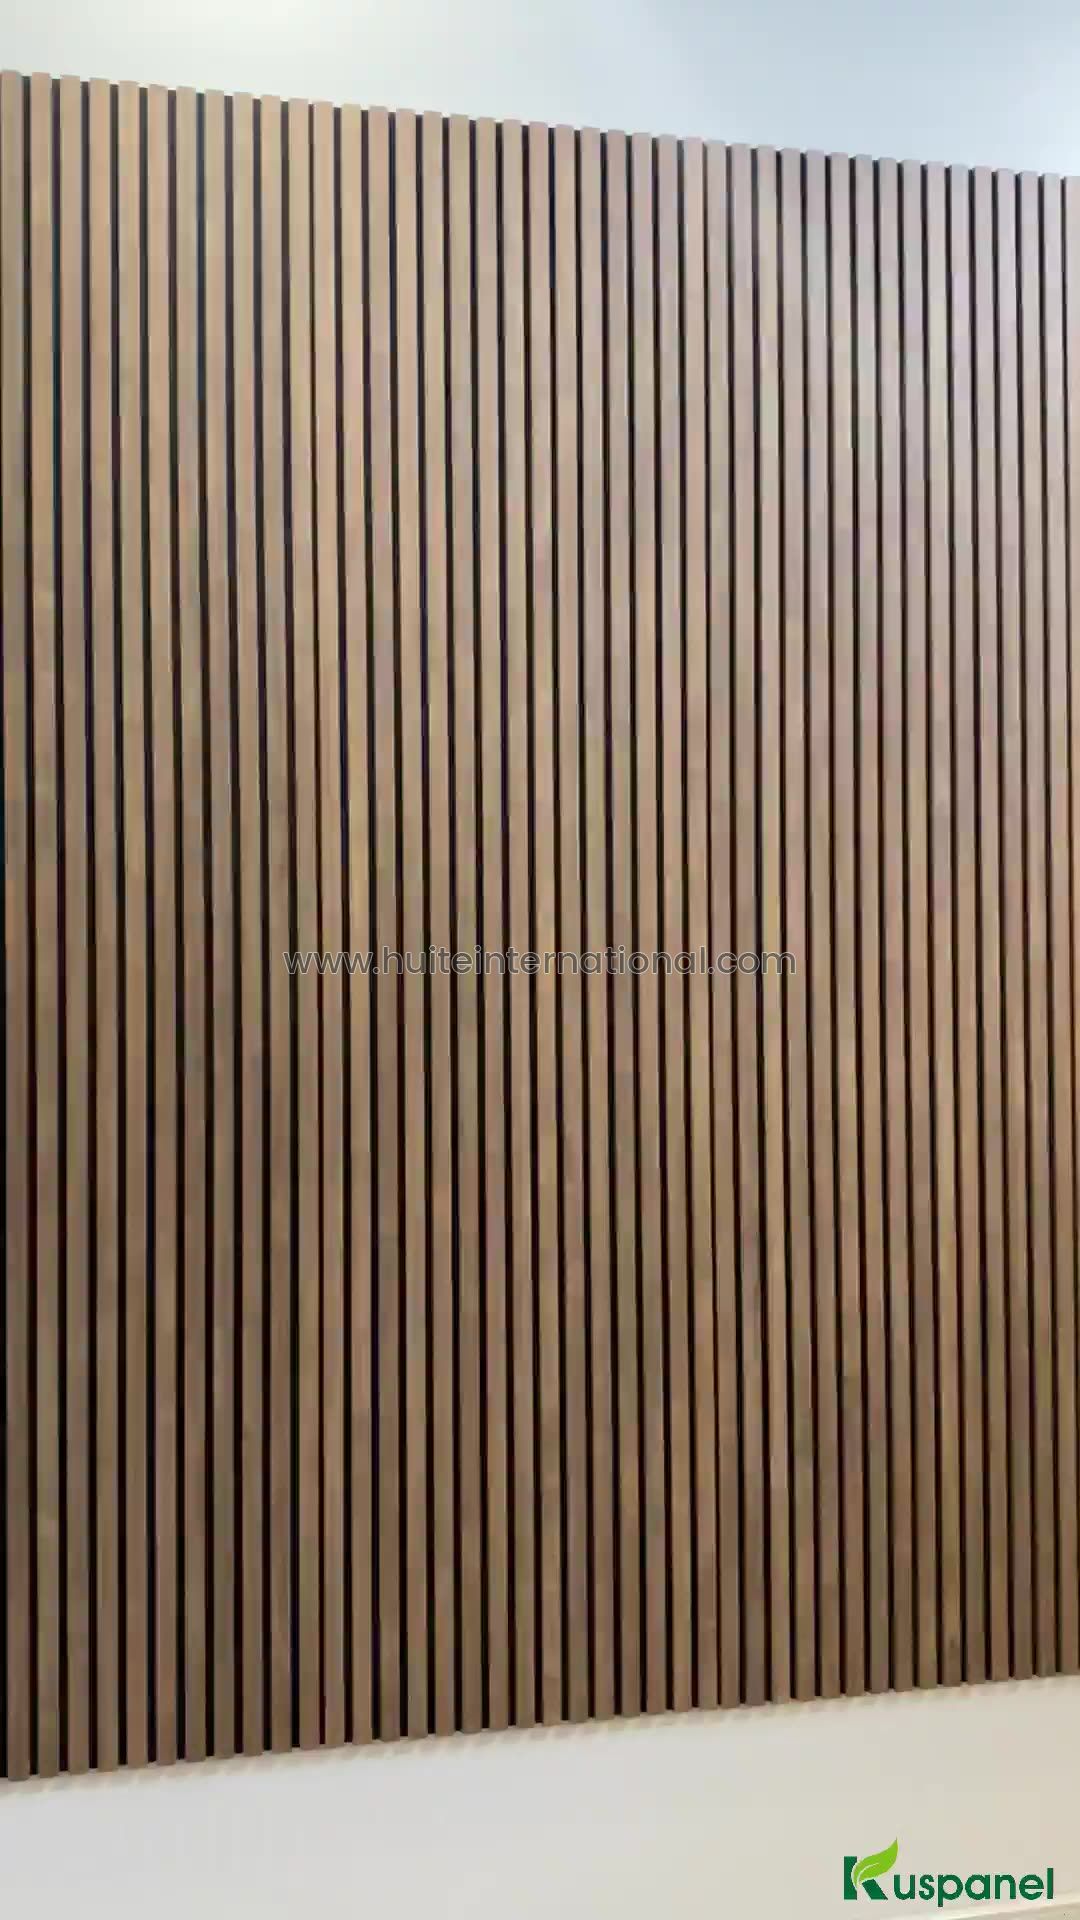 Wood Veneer PET MDF Slat Wall Panels